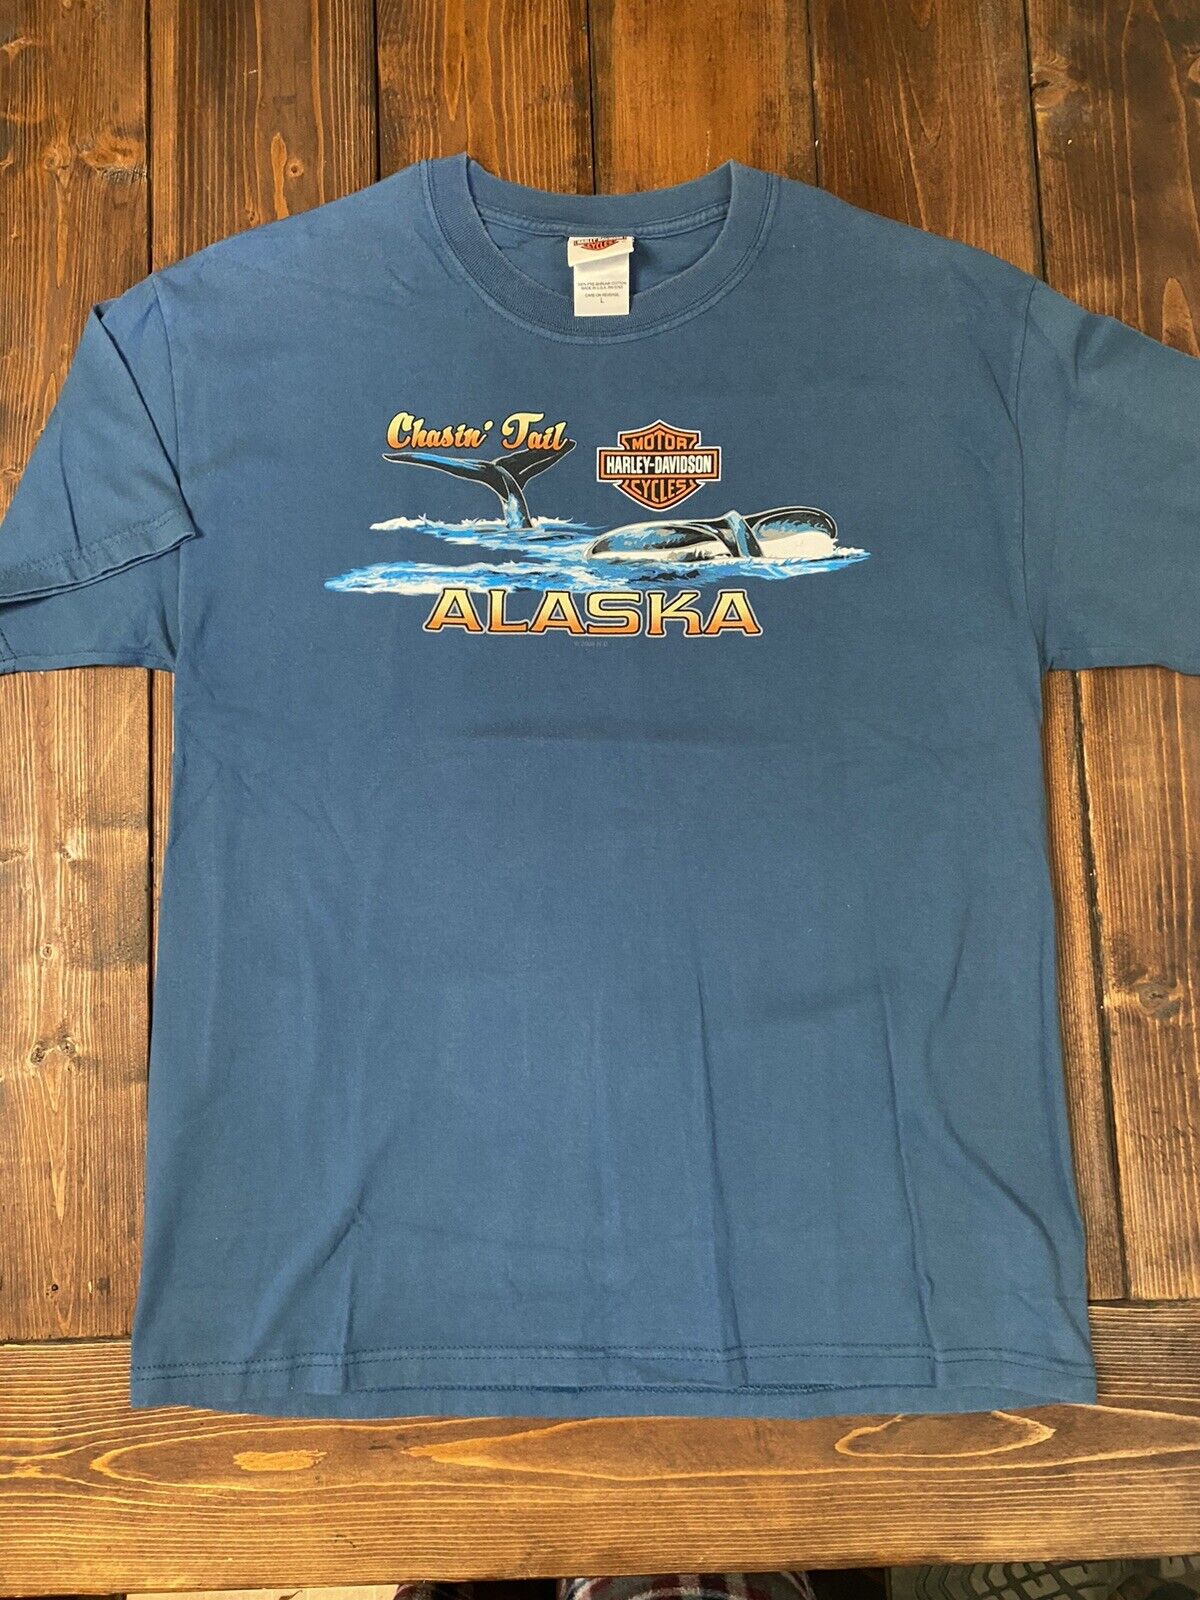 Harley Davidson Shirt Alaska Chasin’ Tail Size Large Chilkoot Pass Shagway